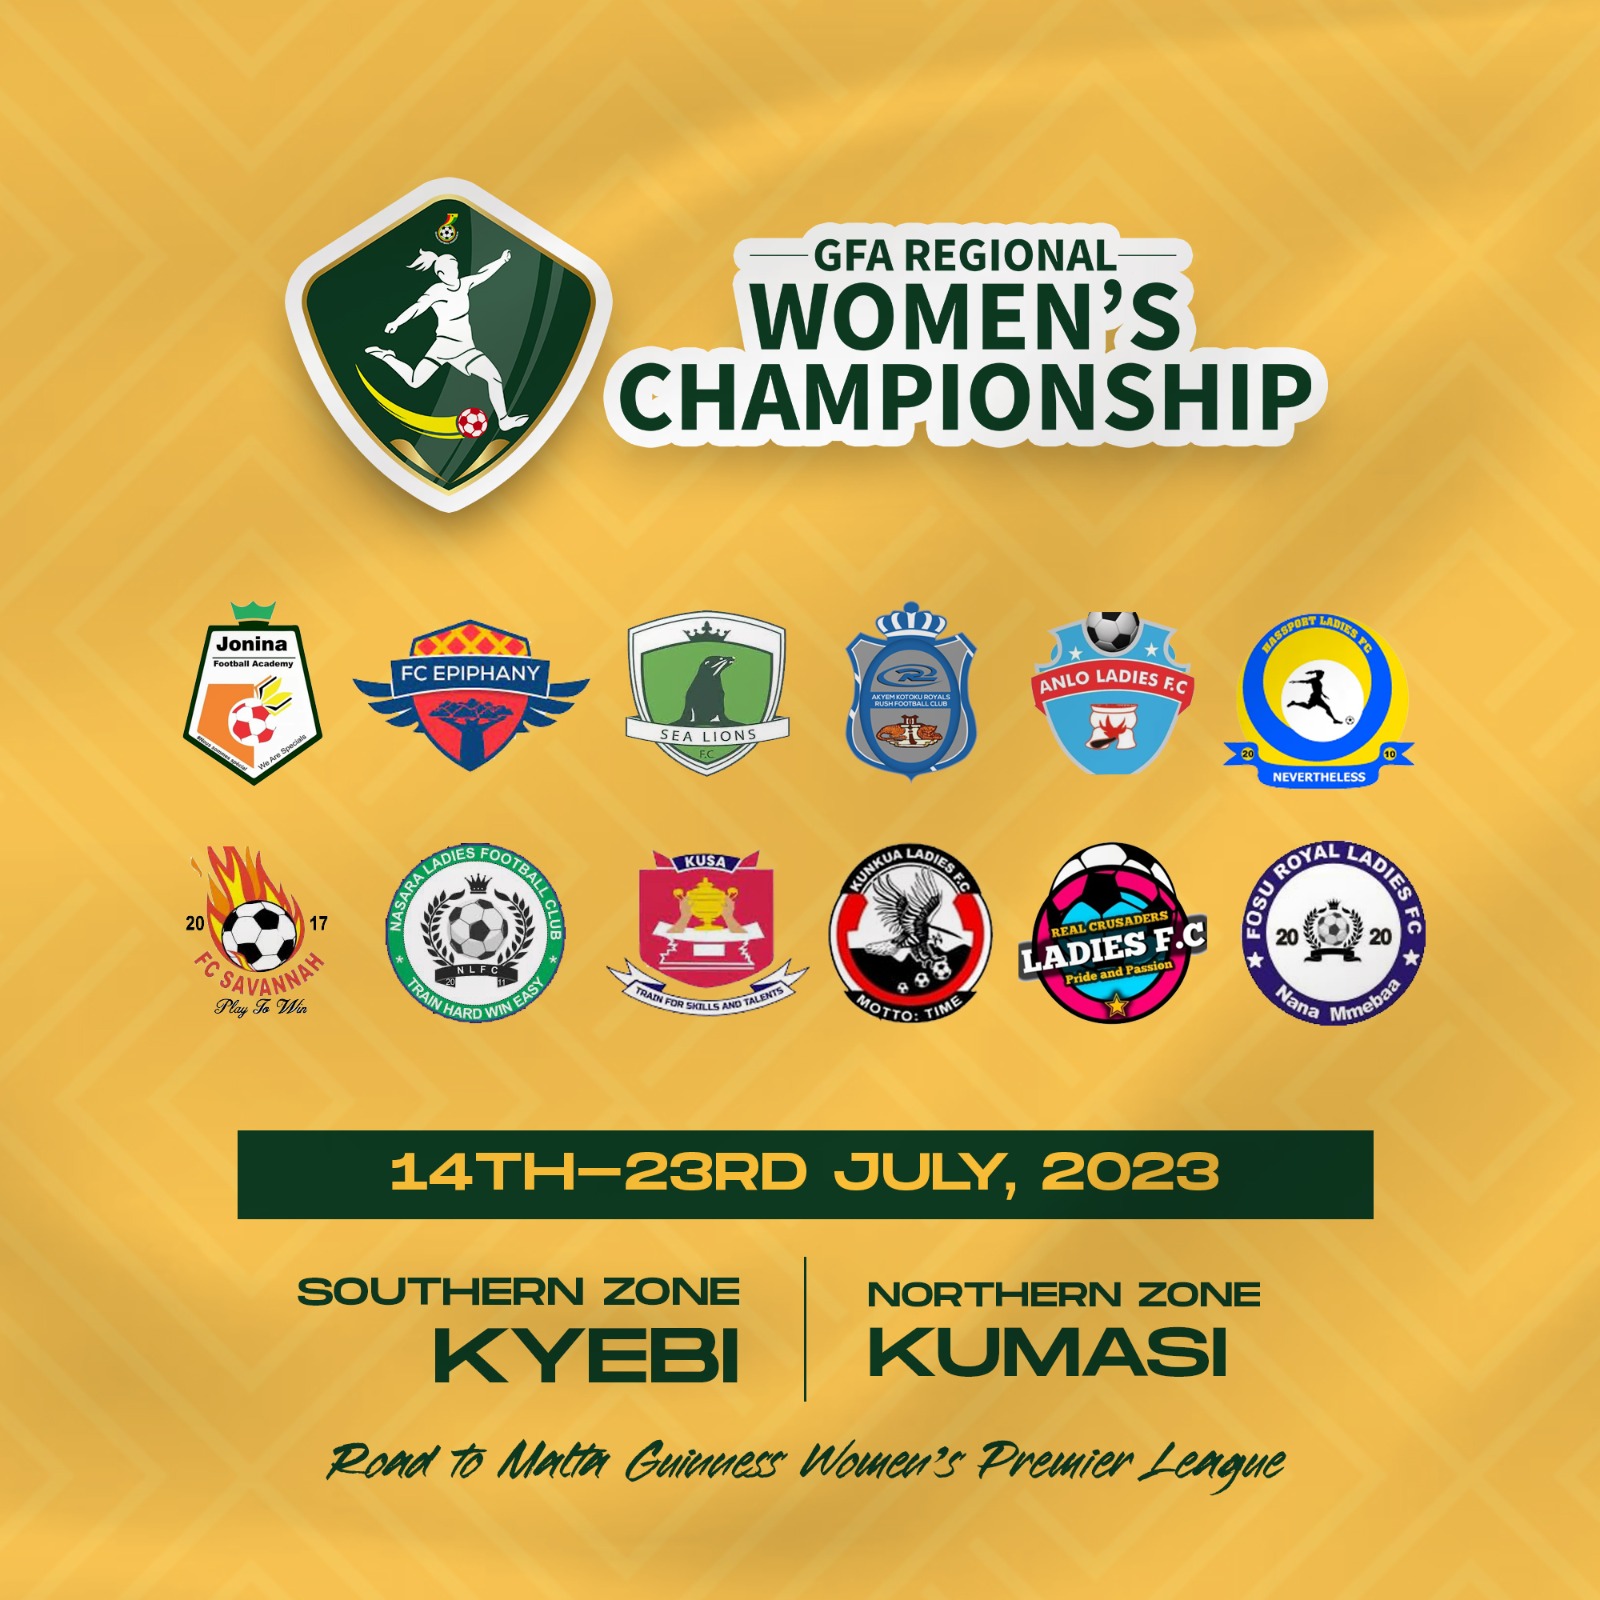 Regional Women's Championship underway on Friday